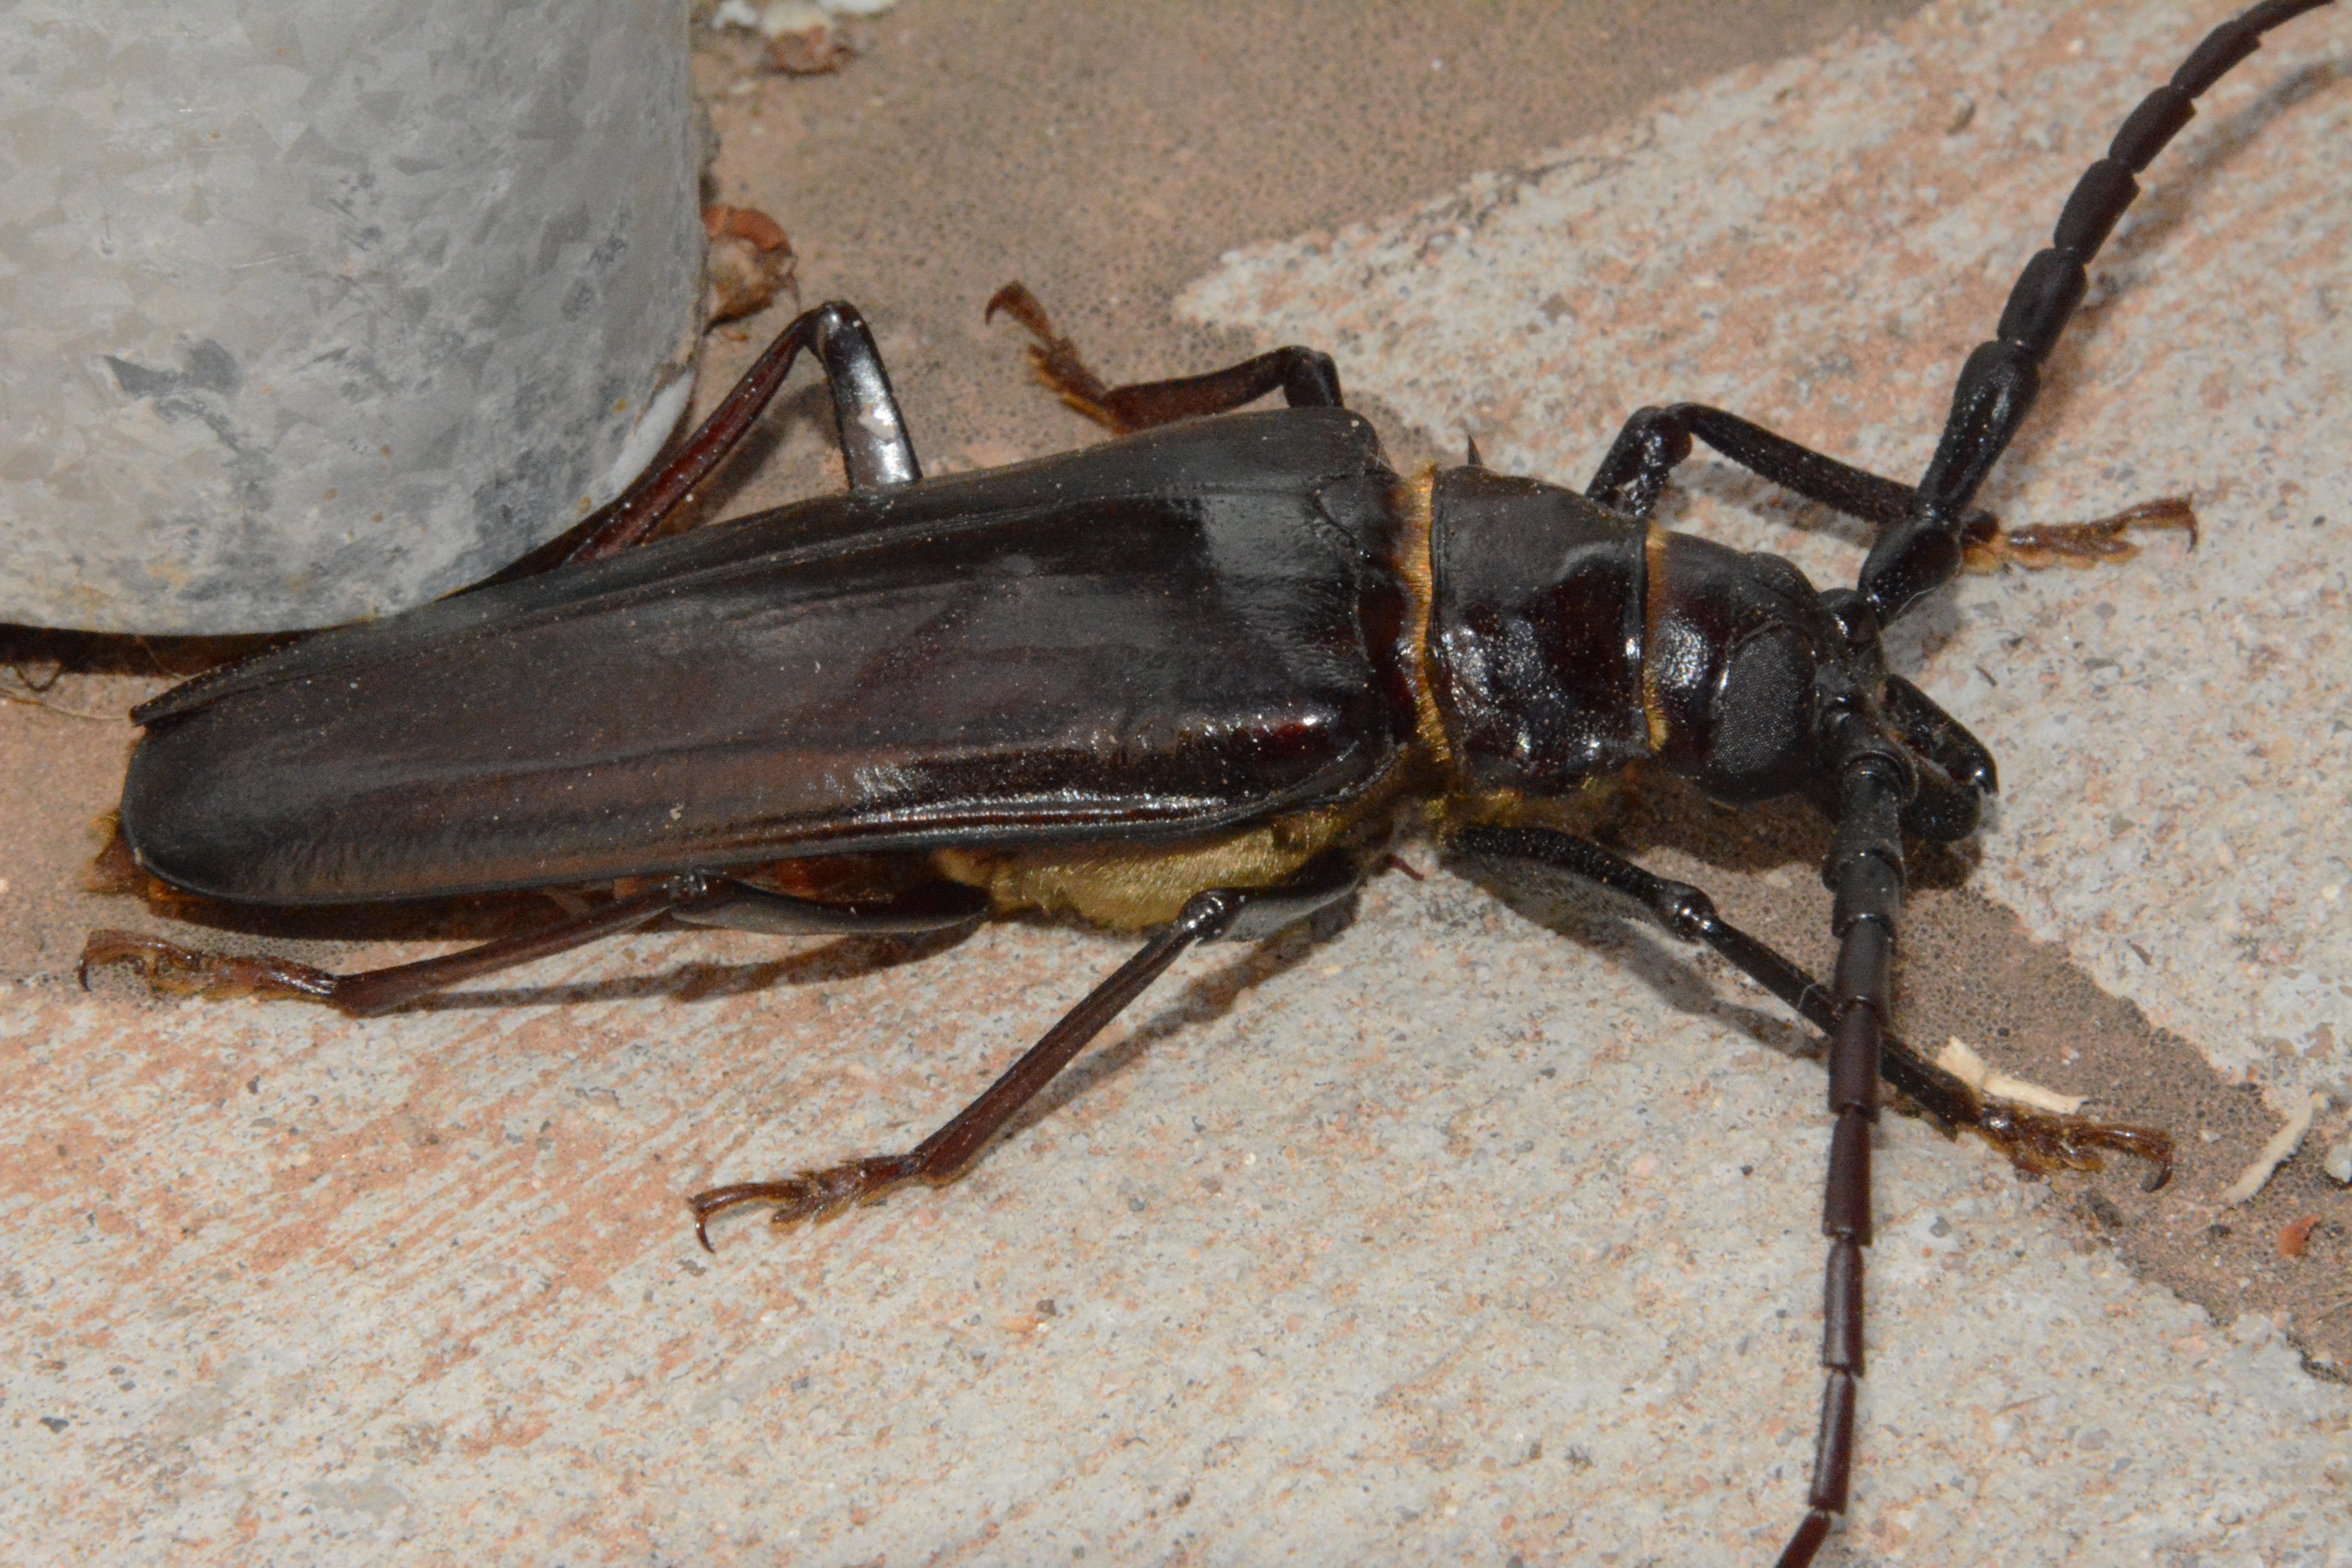 Cerambycidae - Sibley Nature Center